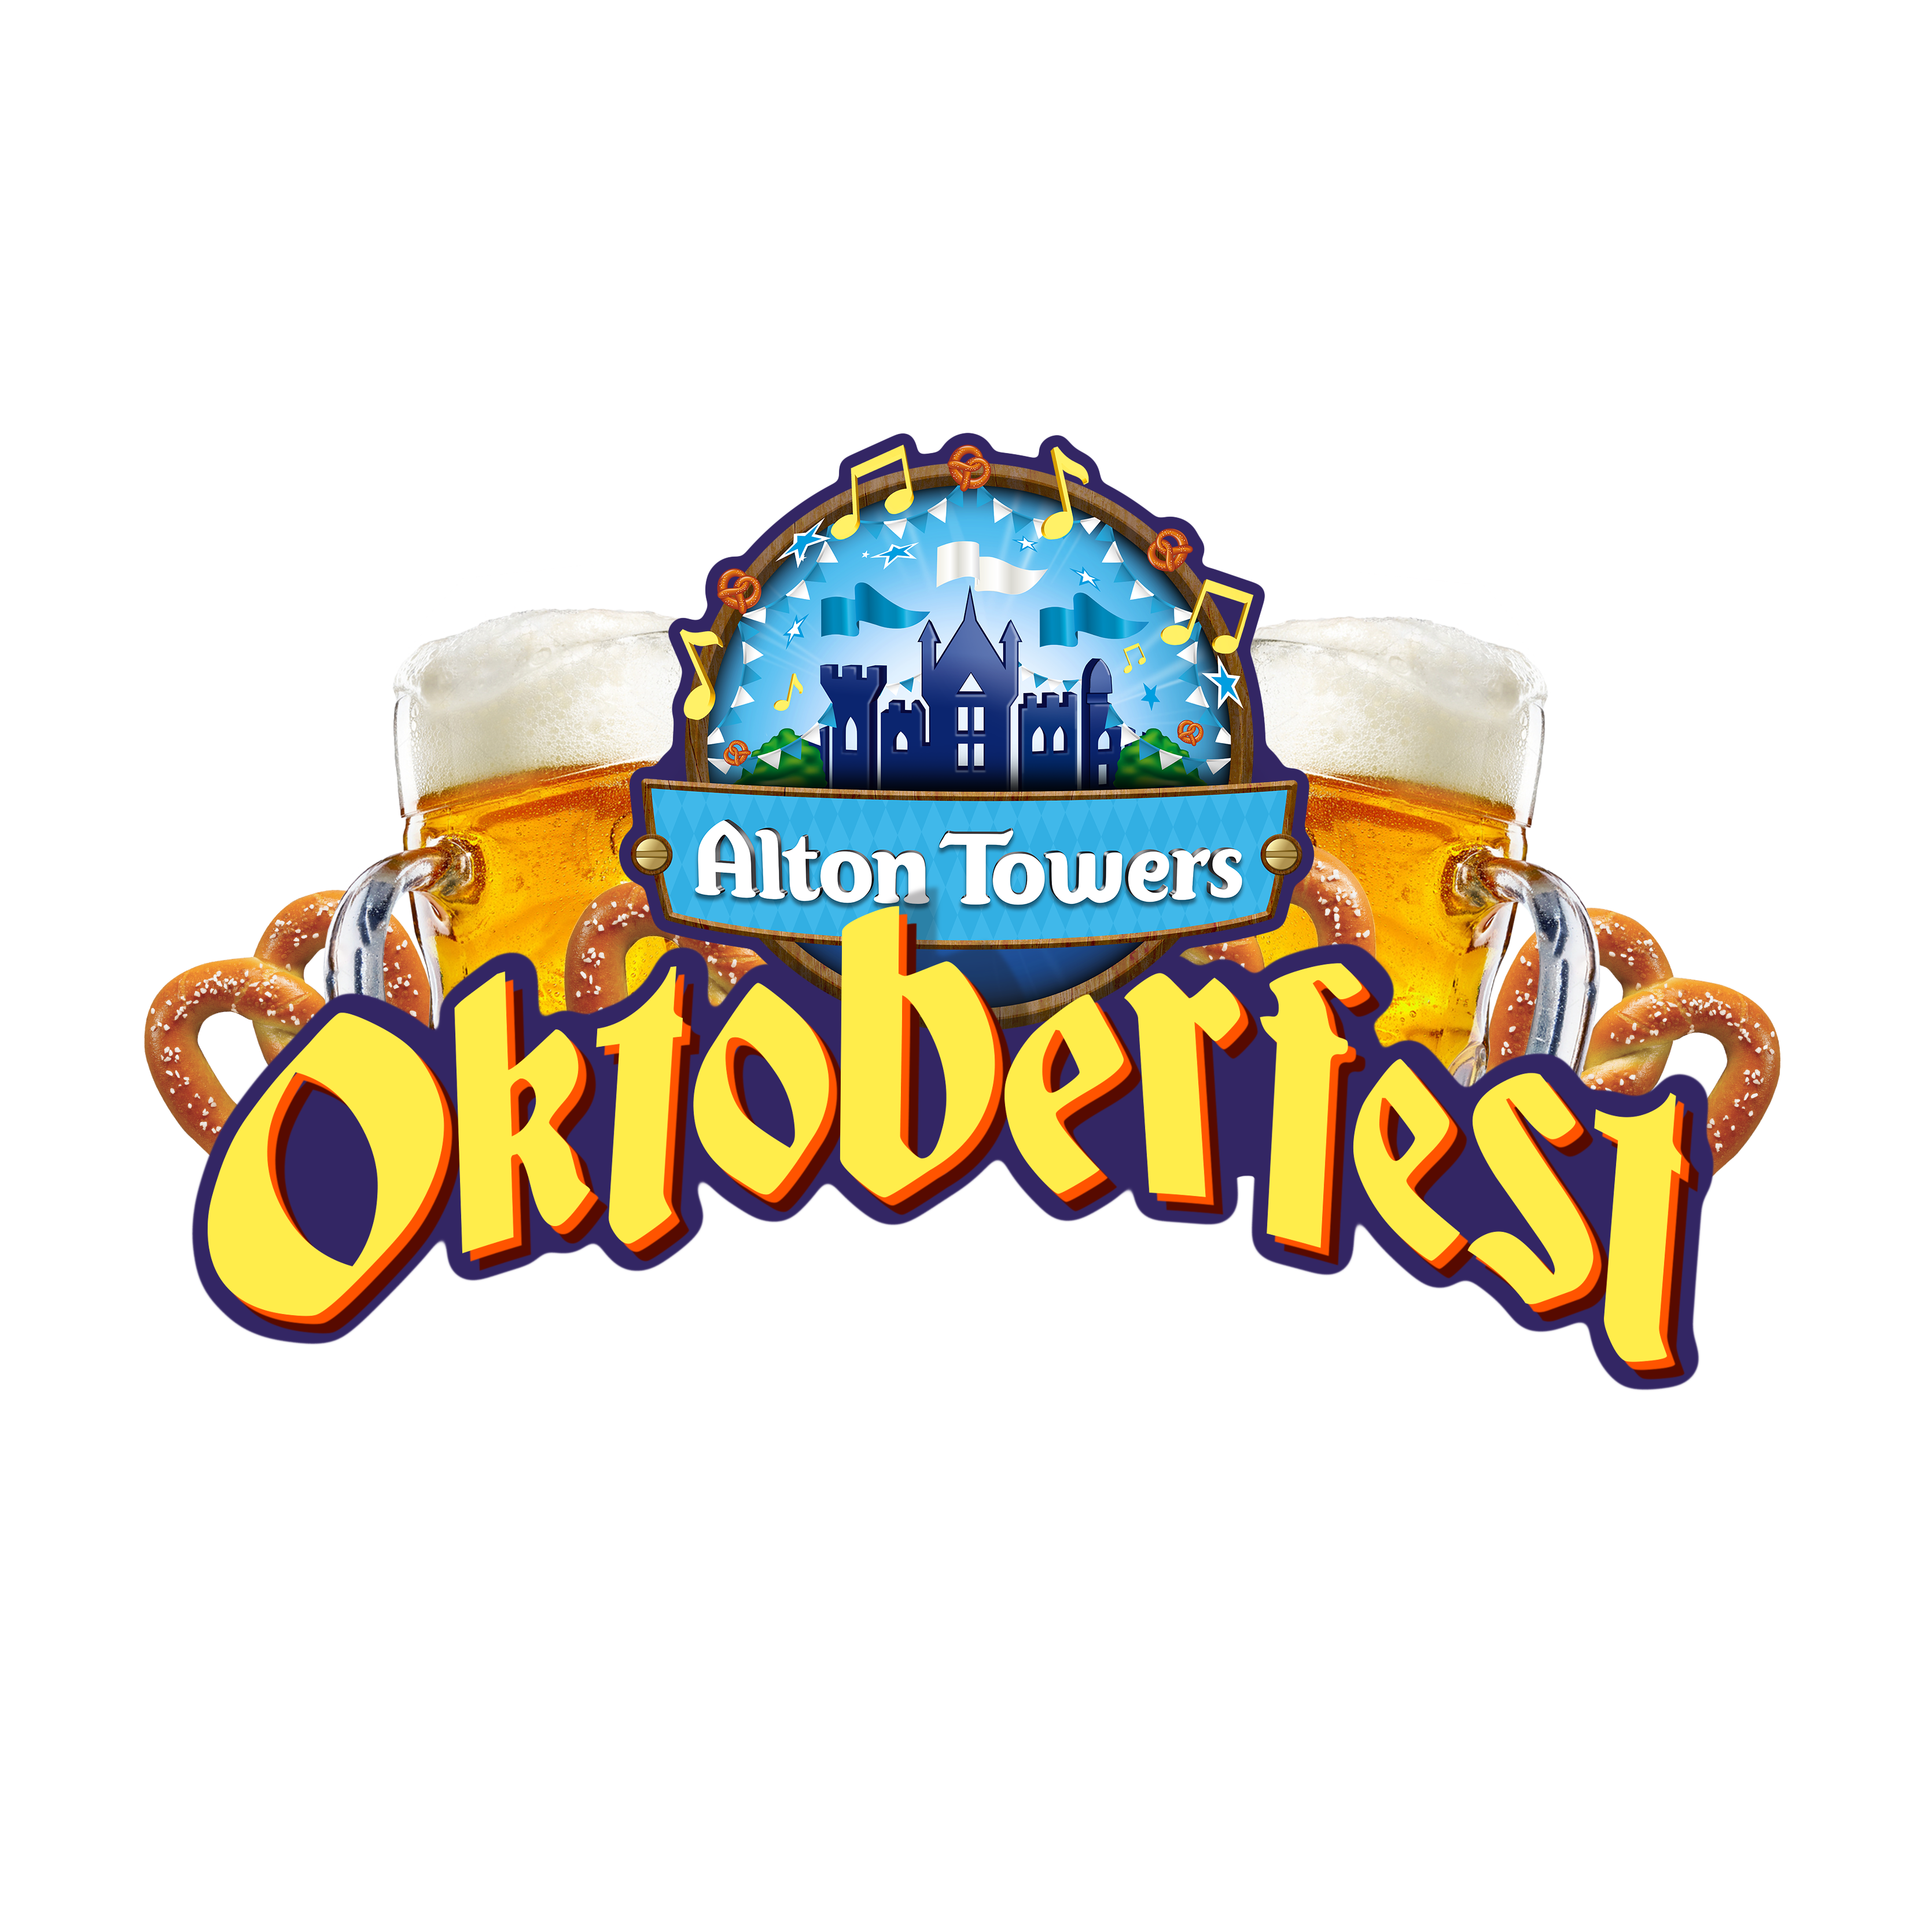 Alton Towers Oktoberfest Begins